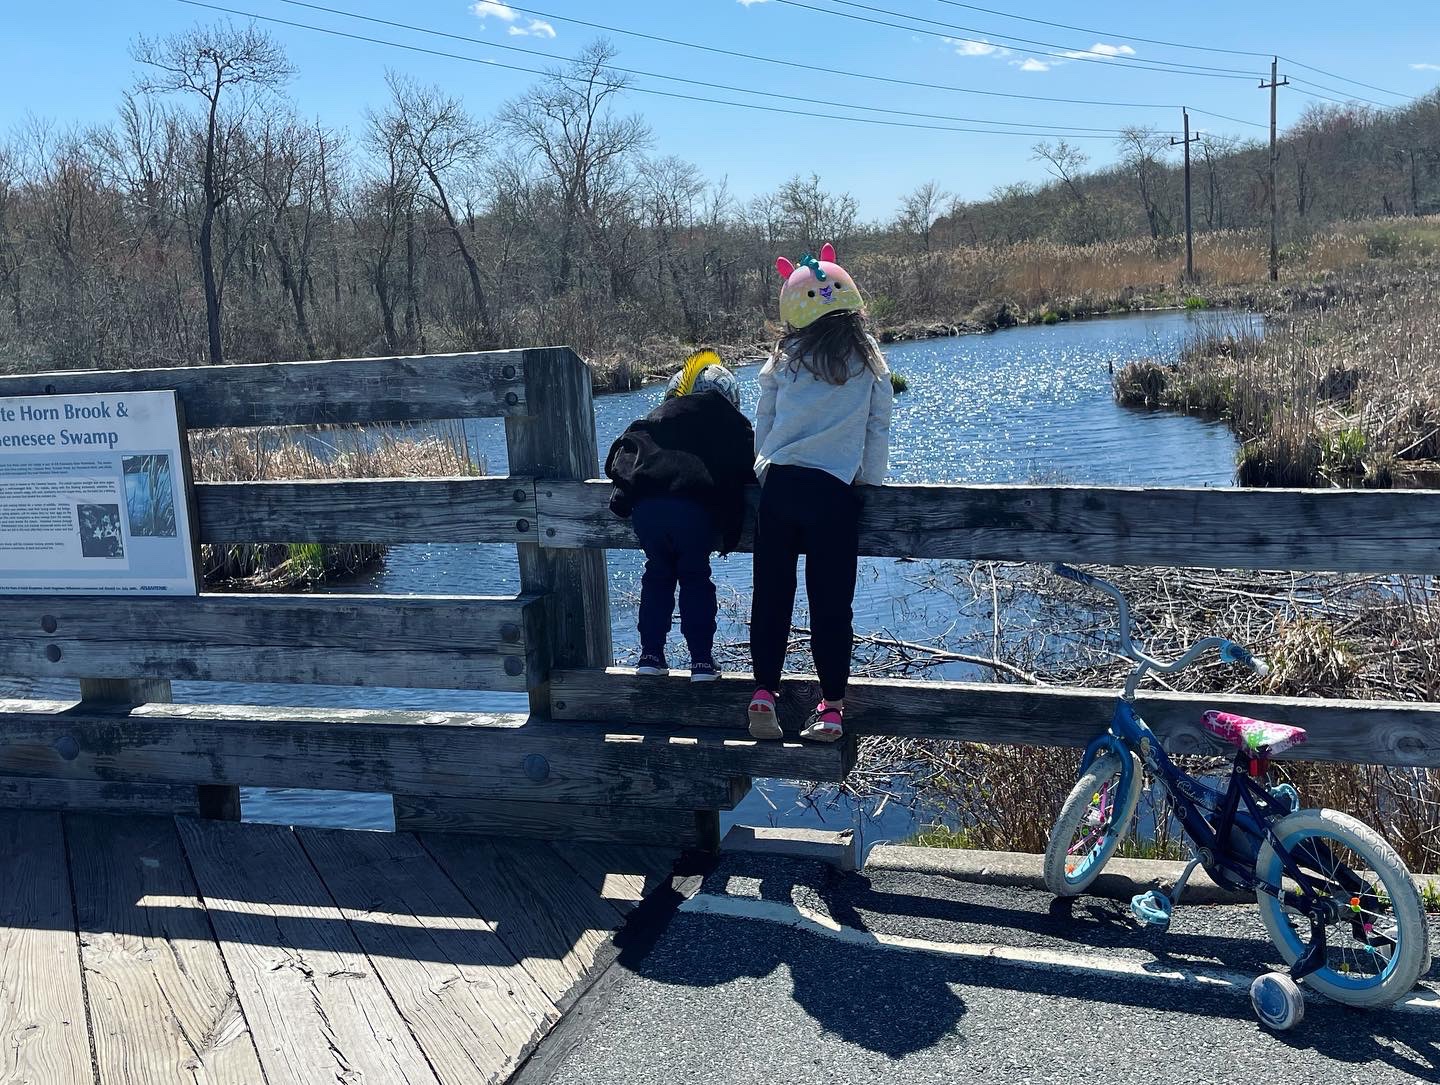 South County Bike Trail in Rhode Island with kids